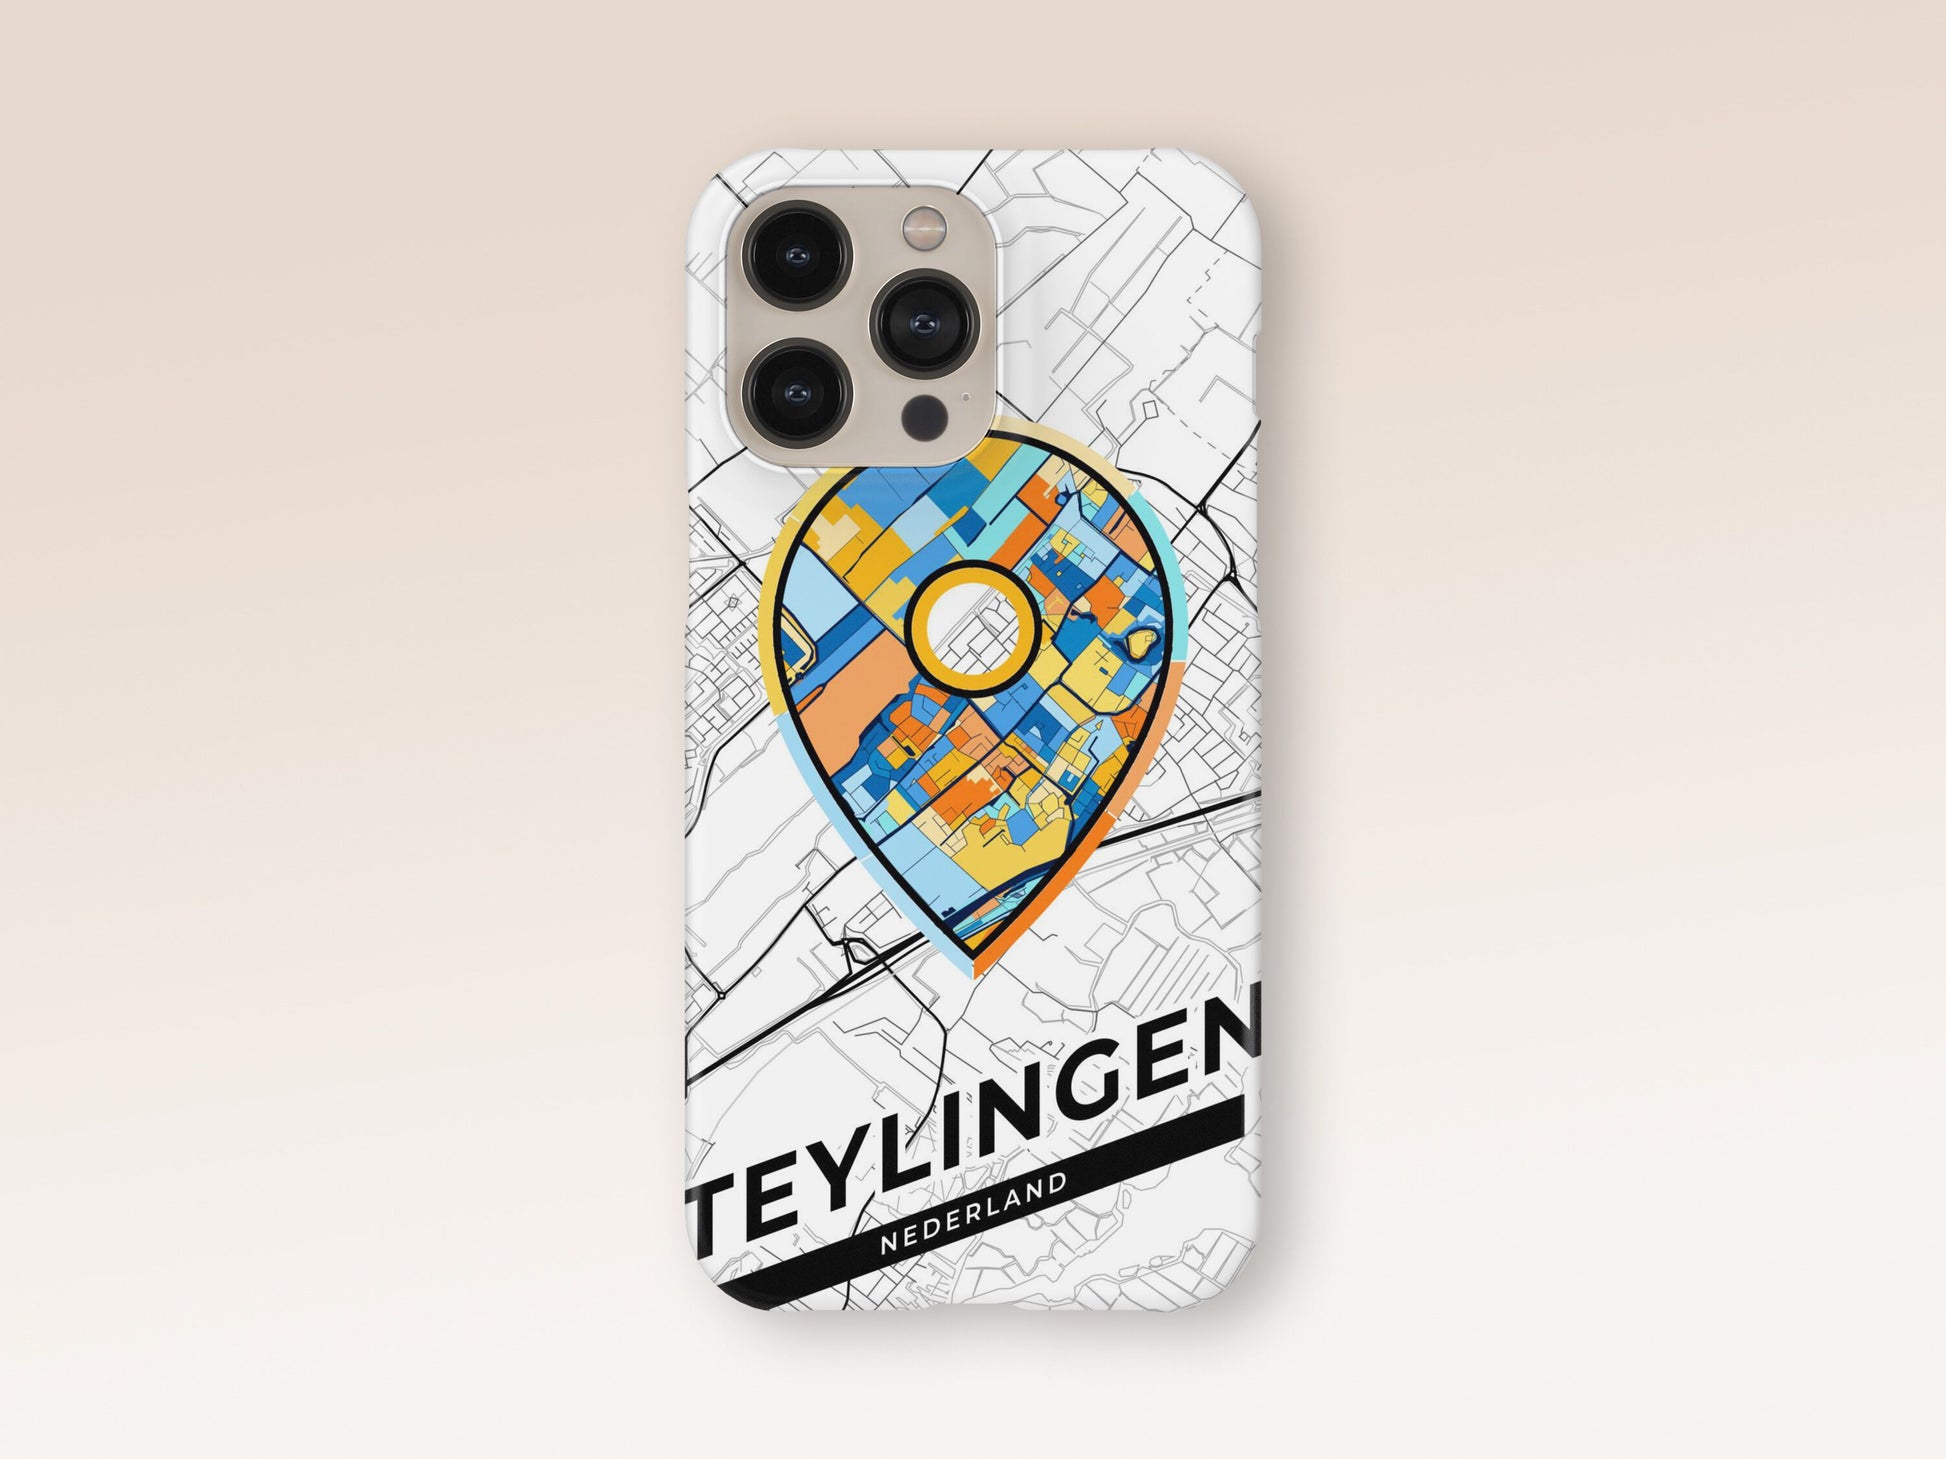 Teylingen Netherlands slim phone case with colorful icon 1